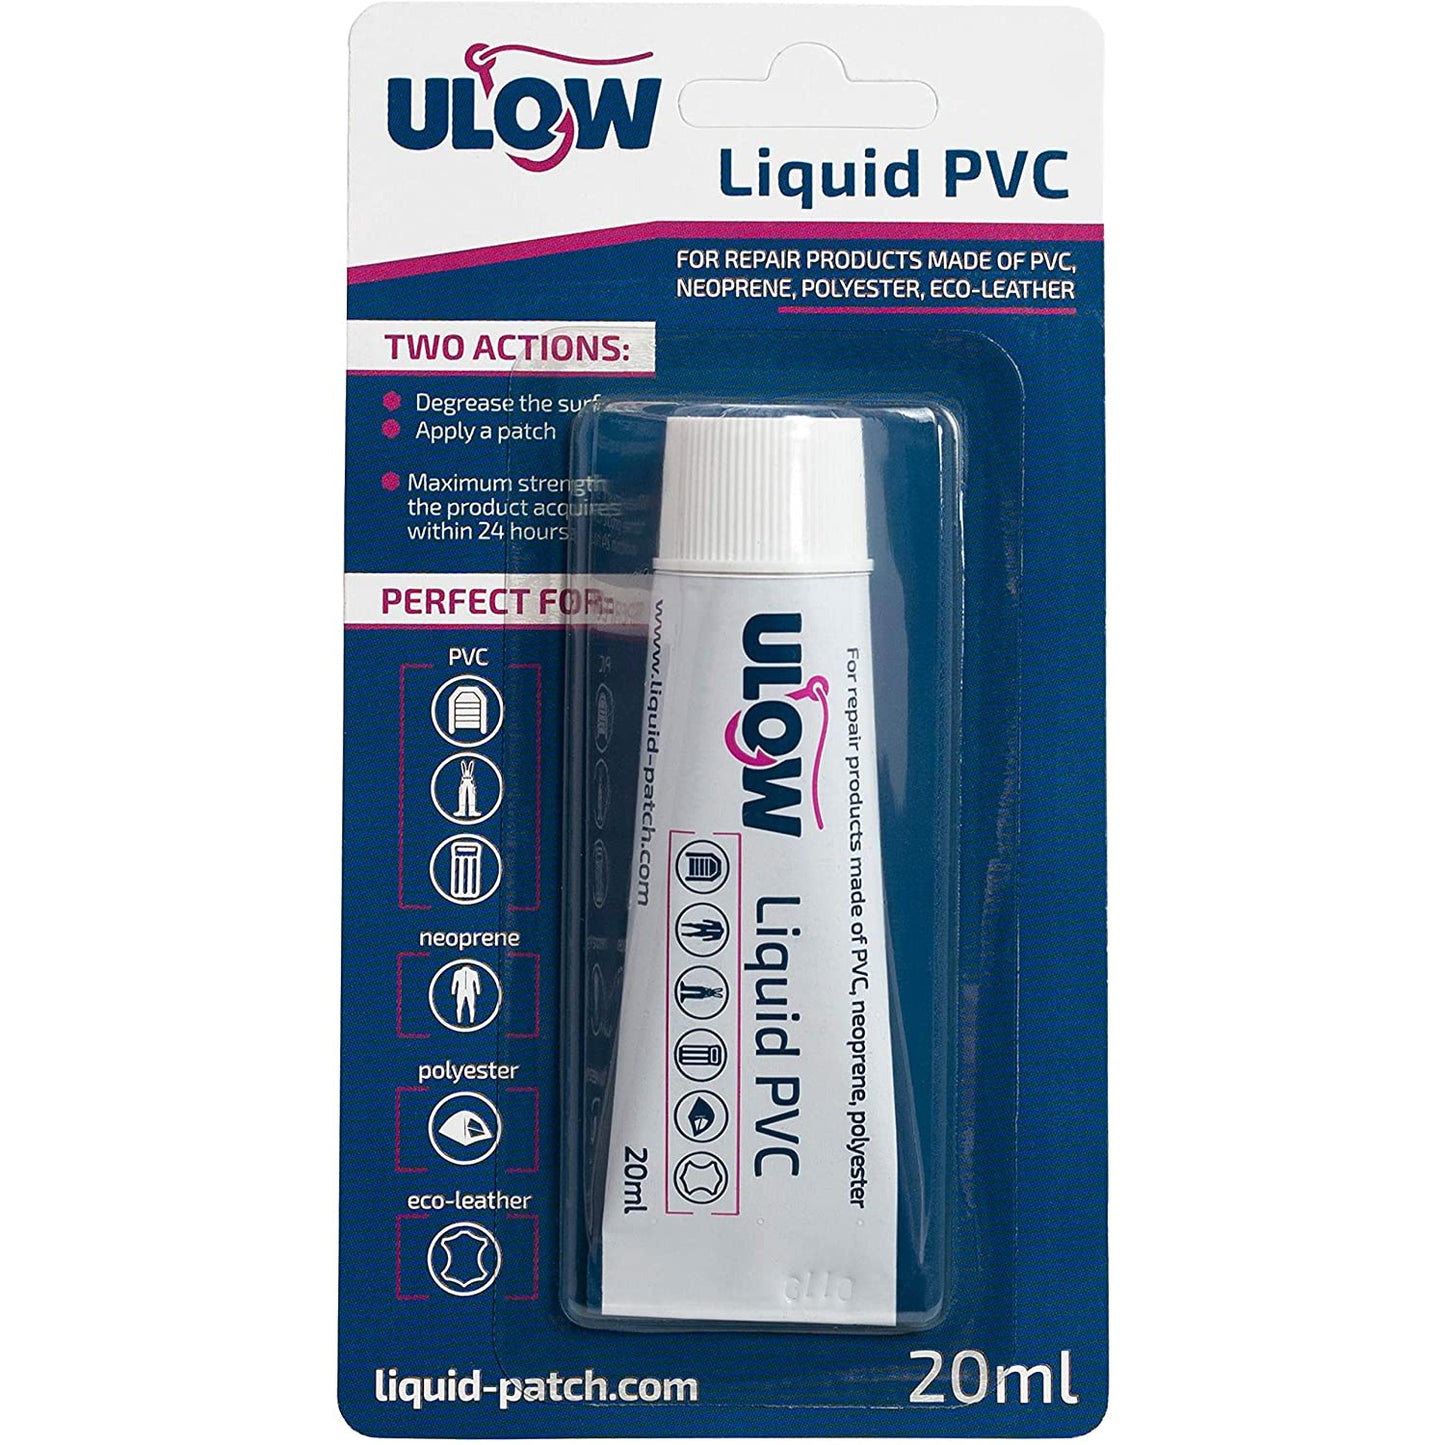 ULOW liquid PVC glue